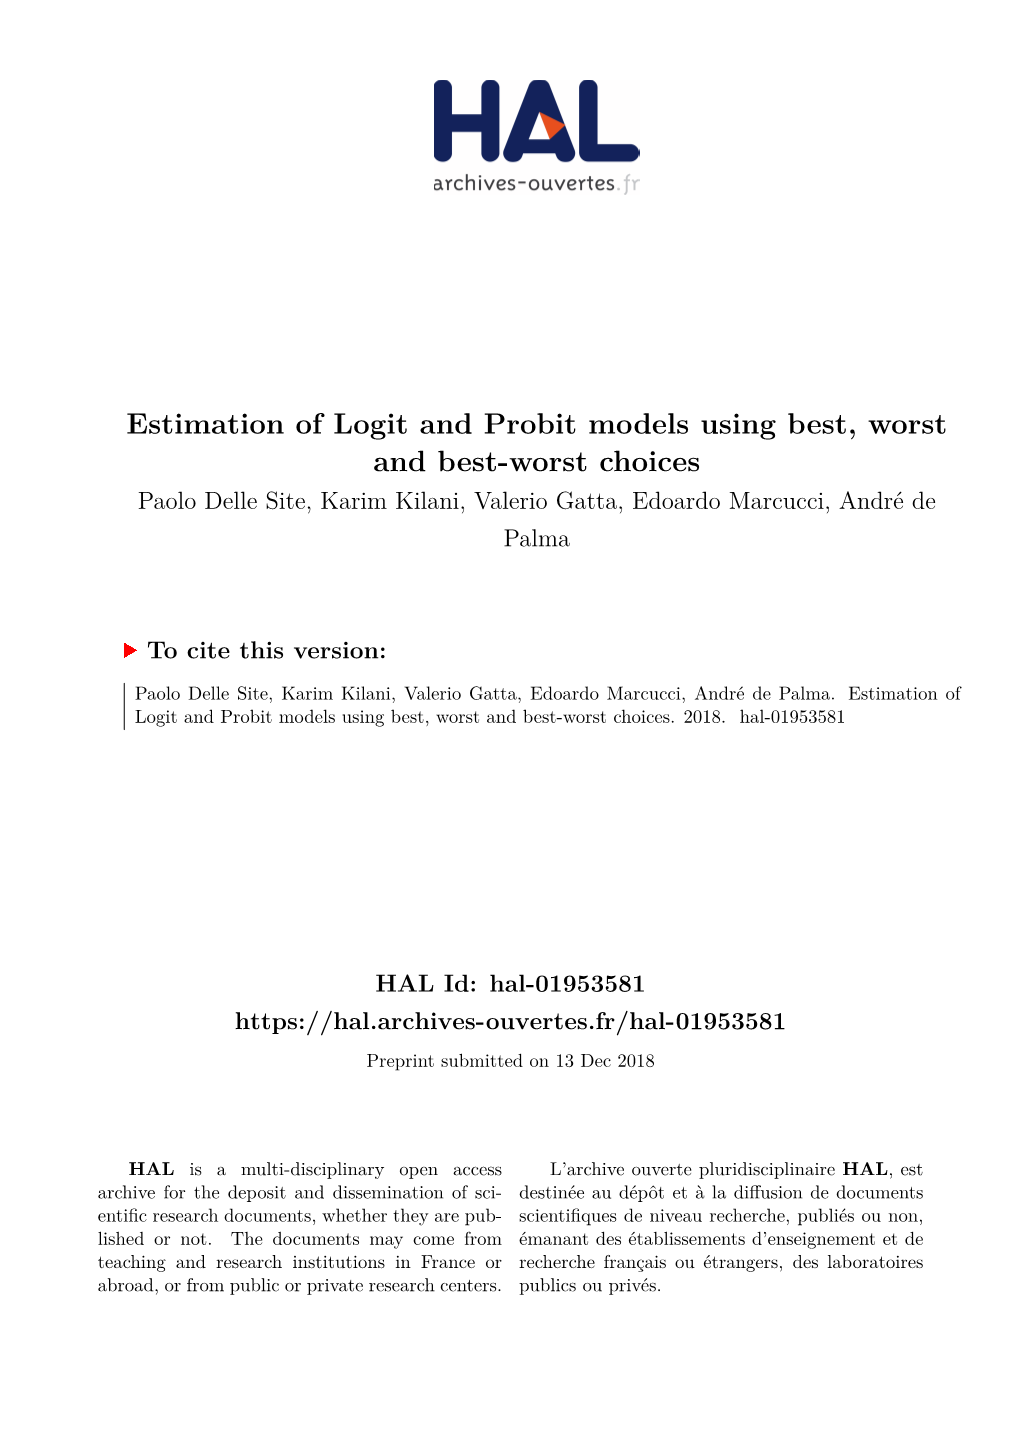 Estimation of Logit and Probit Models Using Best, Worst and Best-Worst Choices Paolo Delle Site, Karim Kilani, Valerio Gatta, Edoardo Marcucci, André De Palma